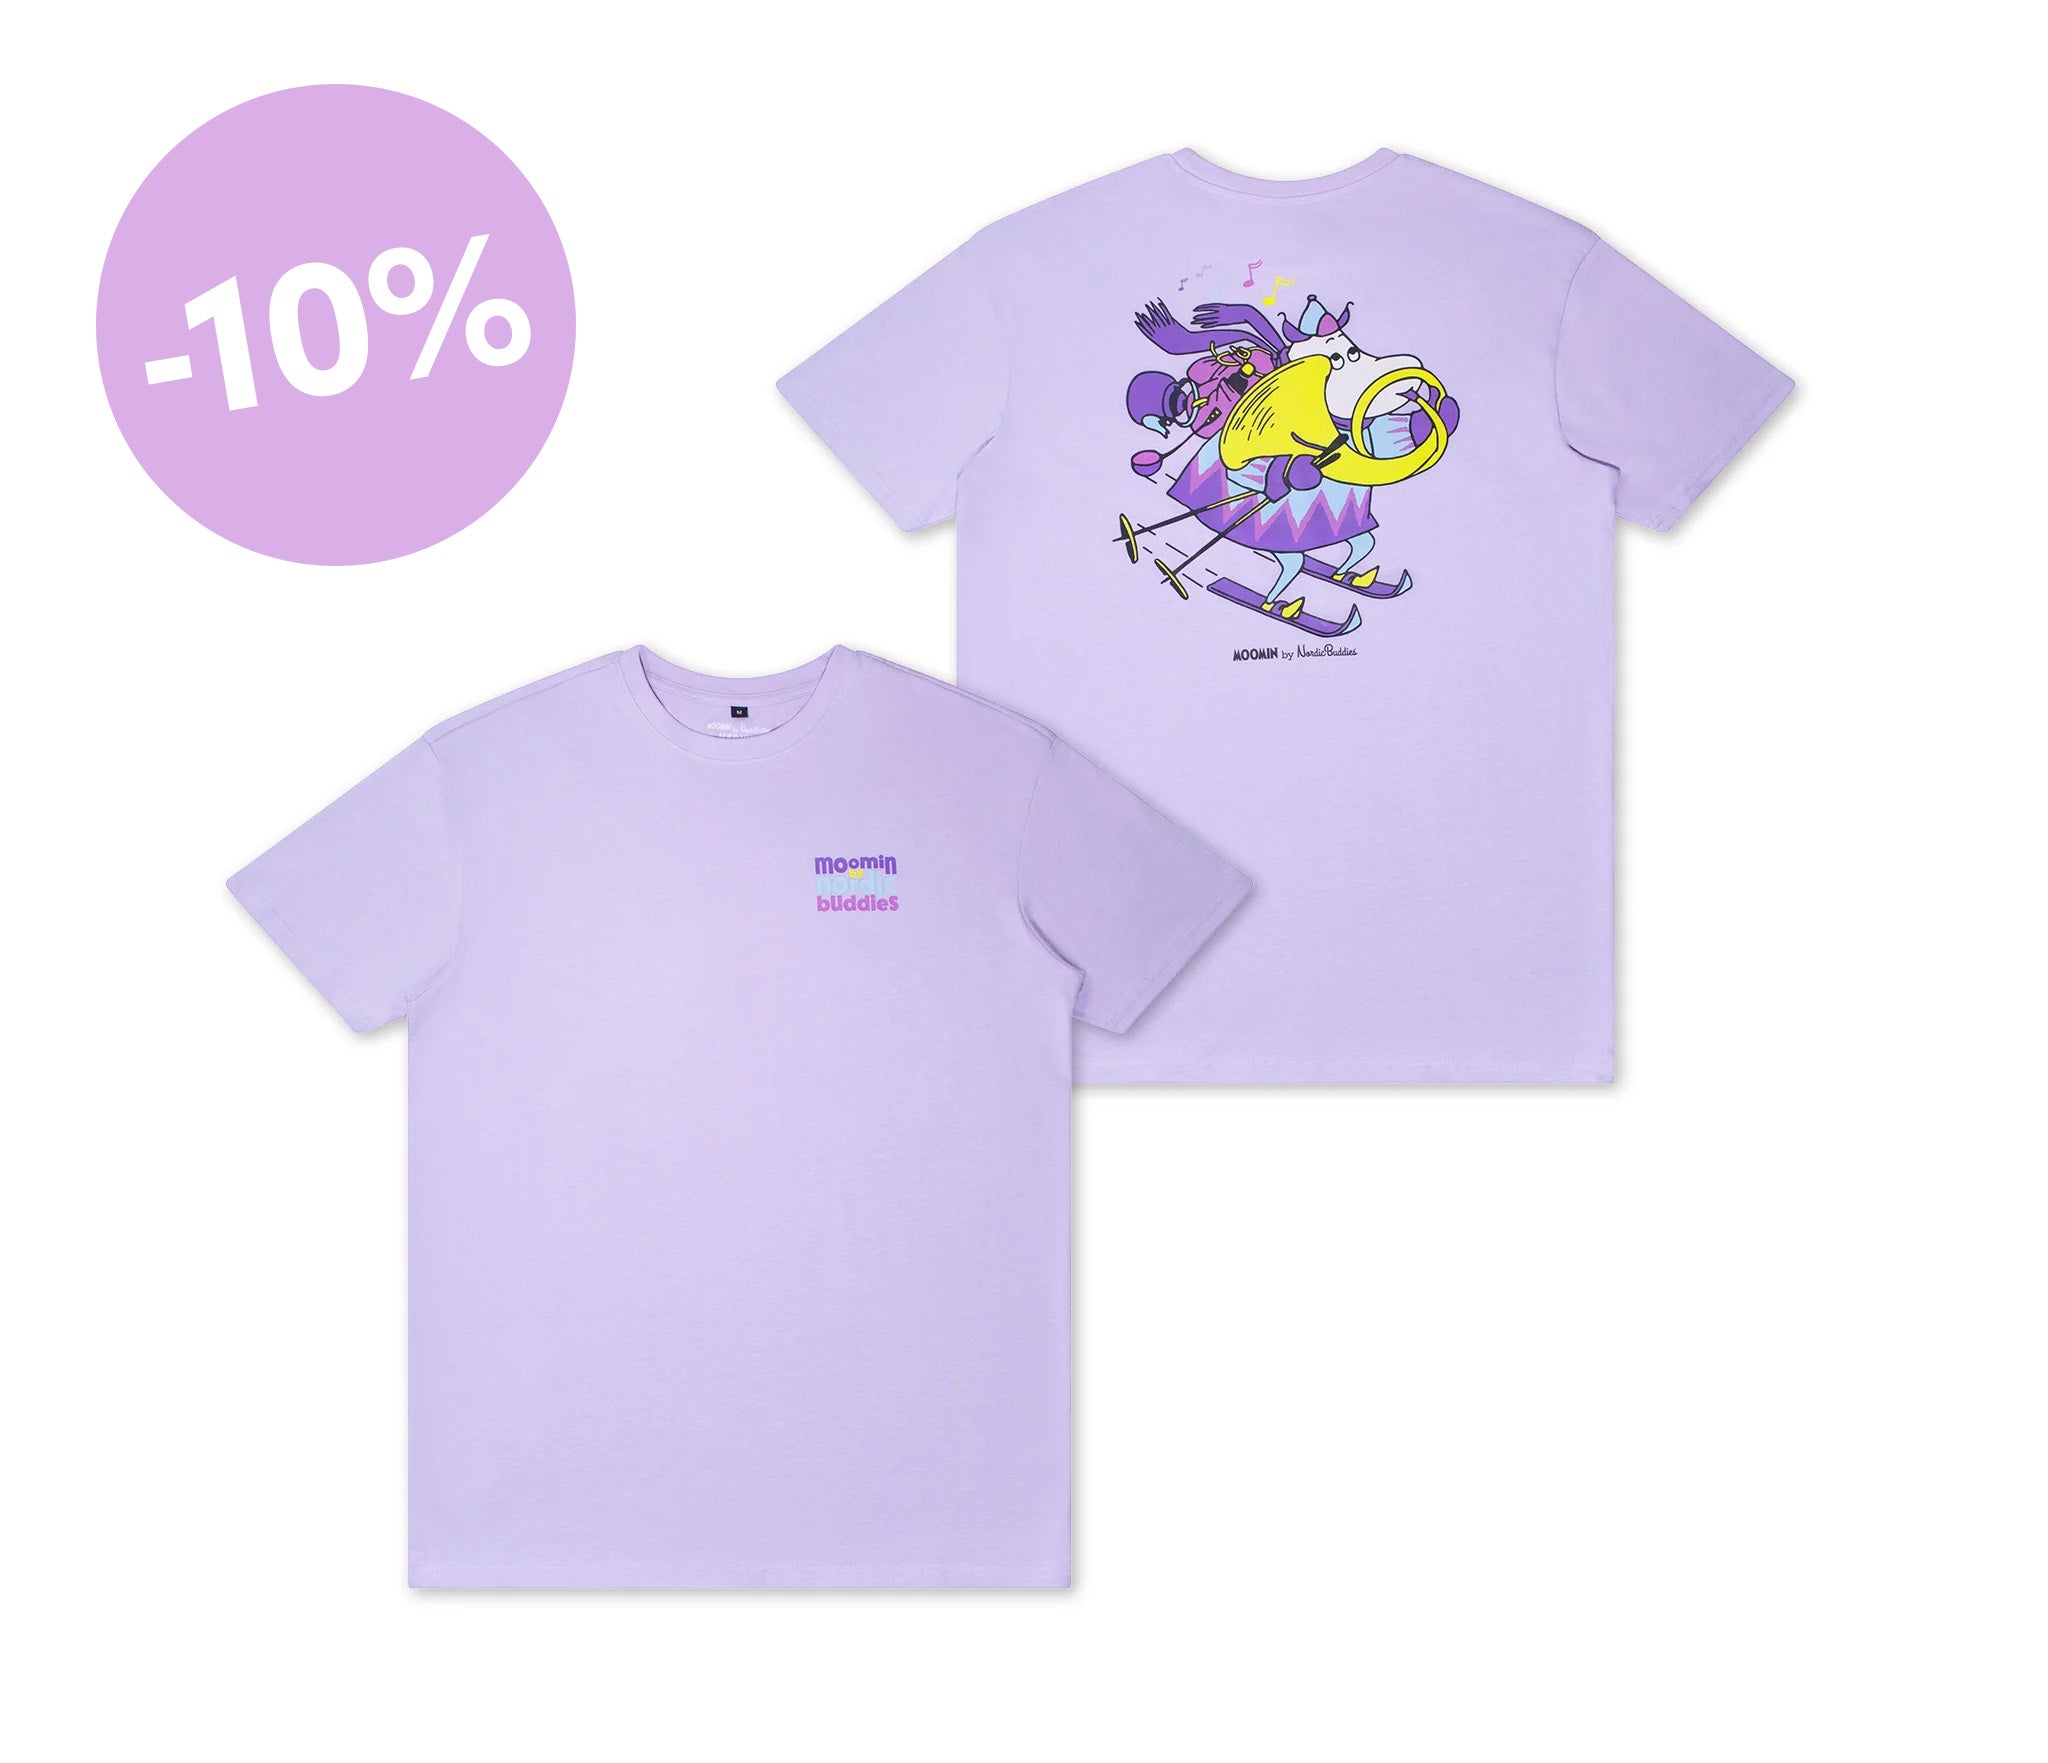 T-Shirt Hemulens - Lilac